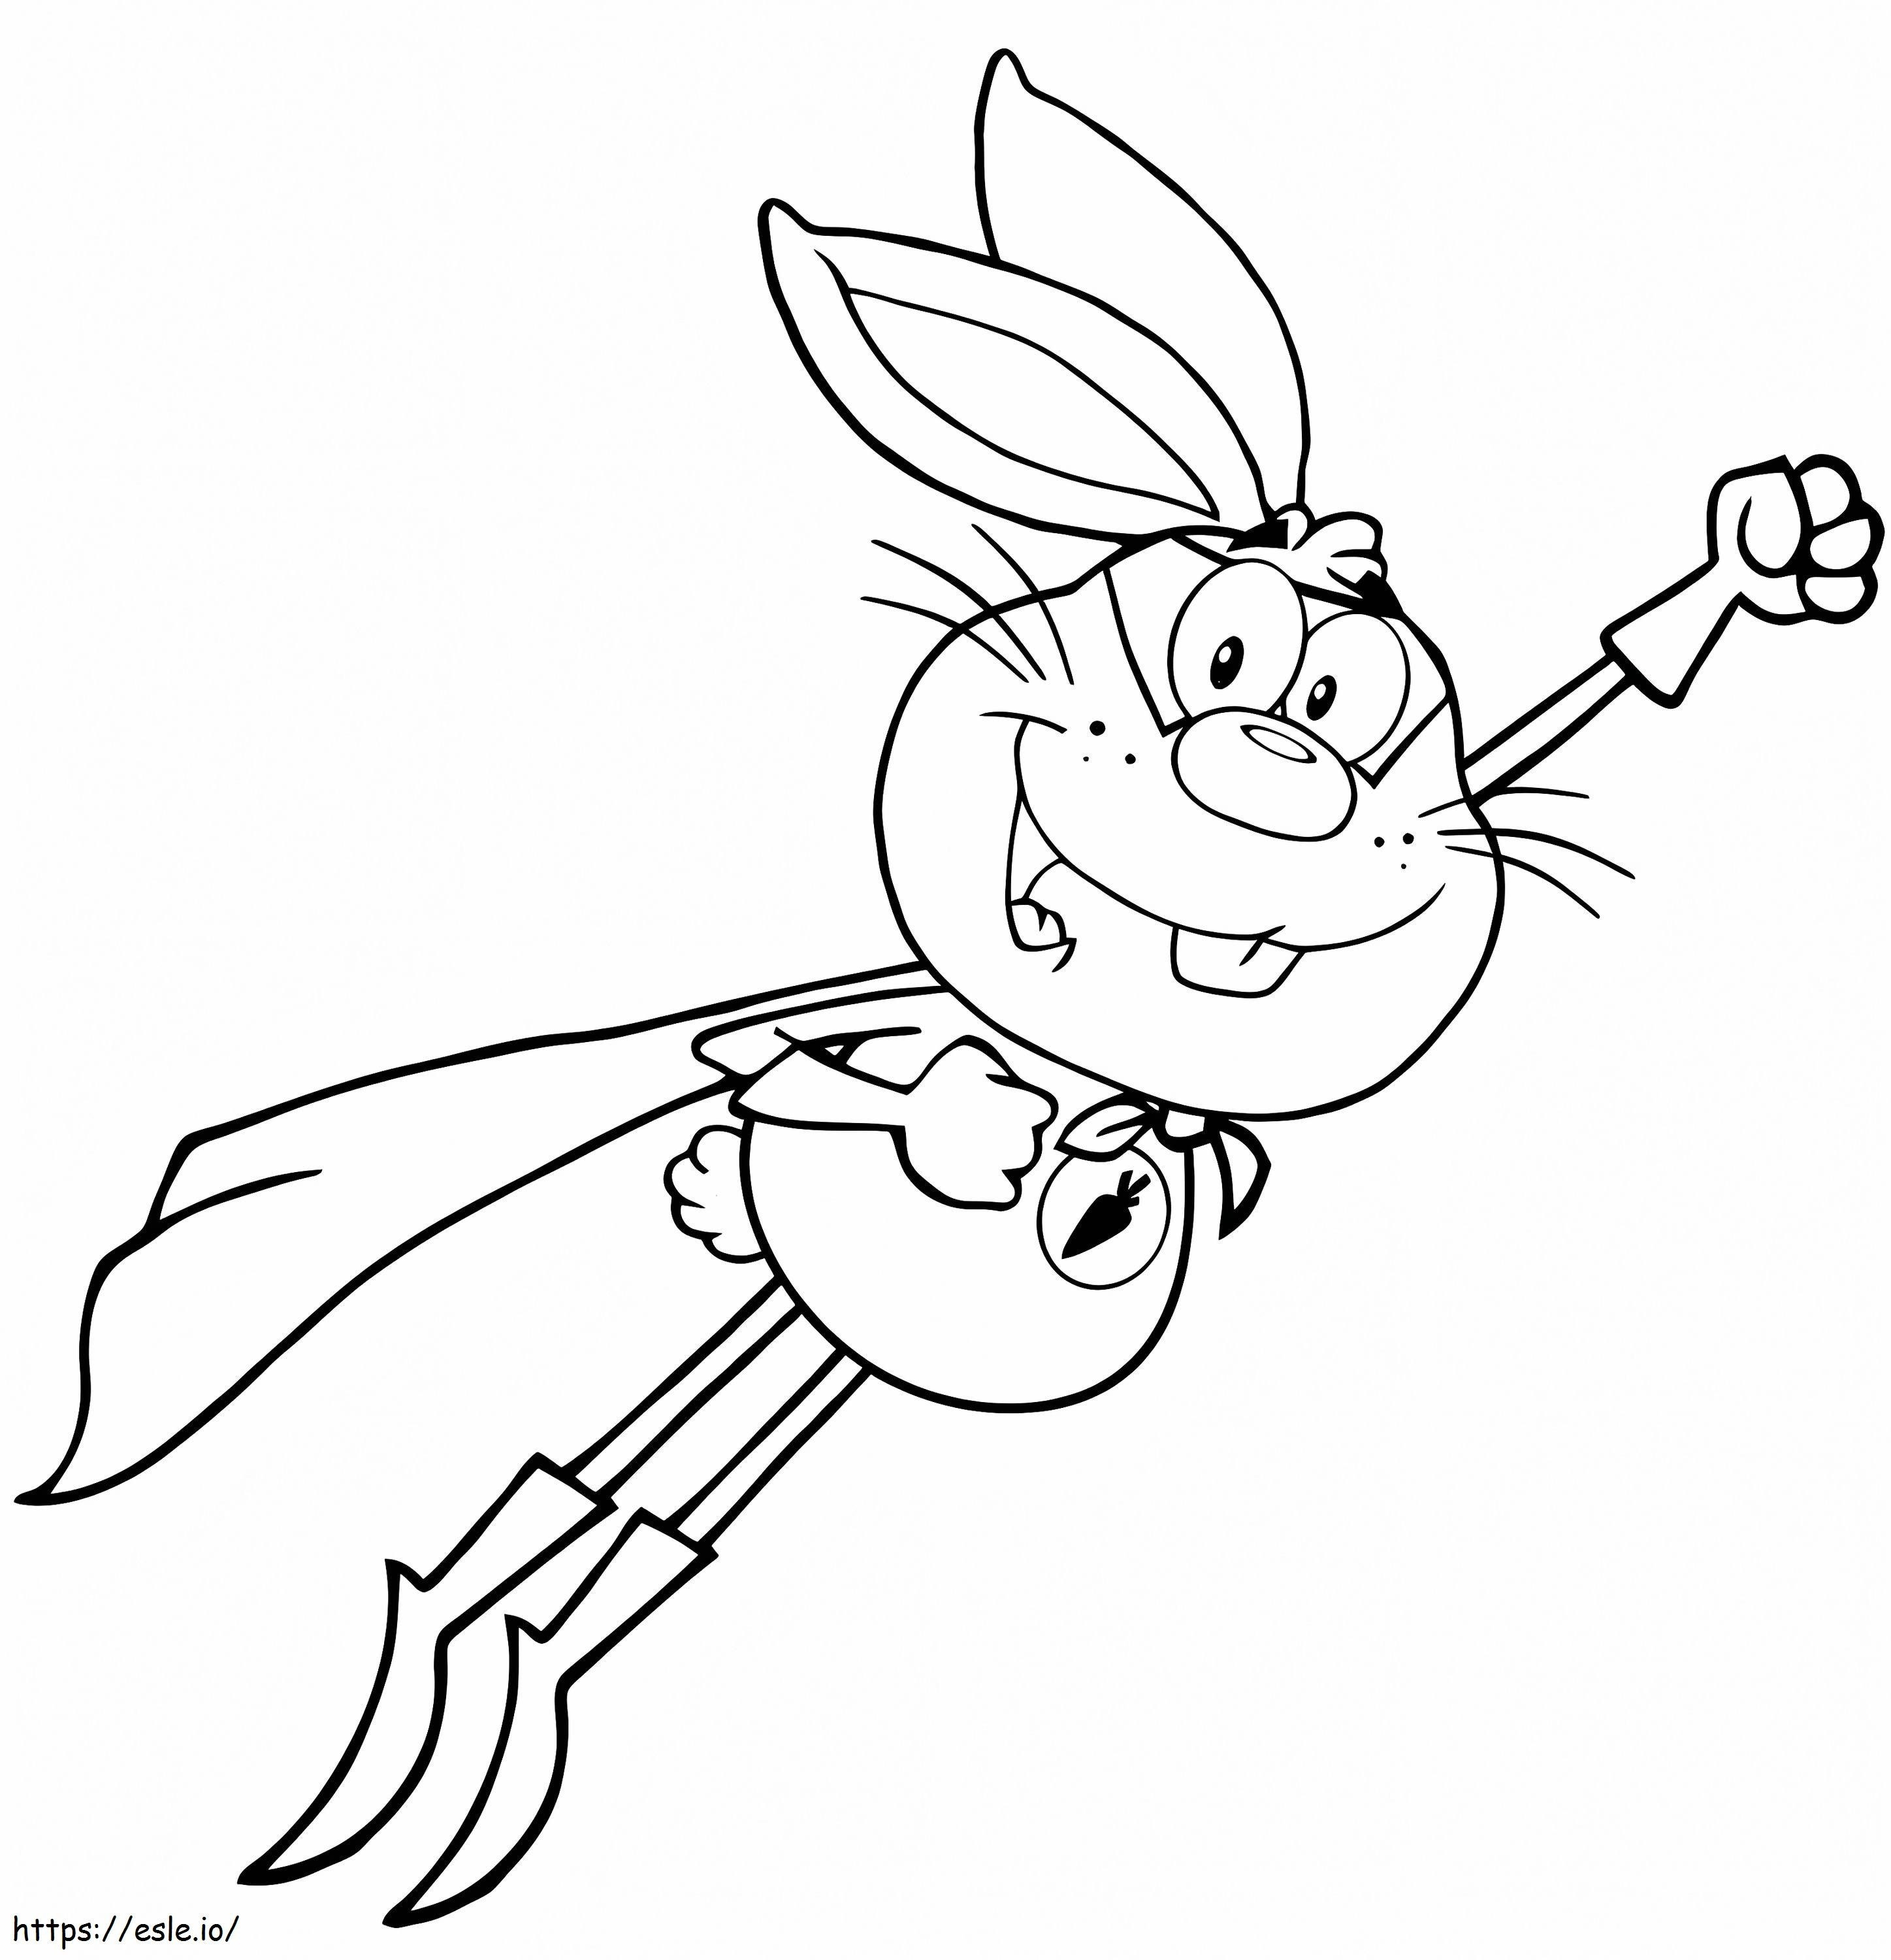 Hero Rabbit coloring page